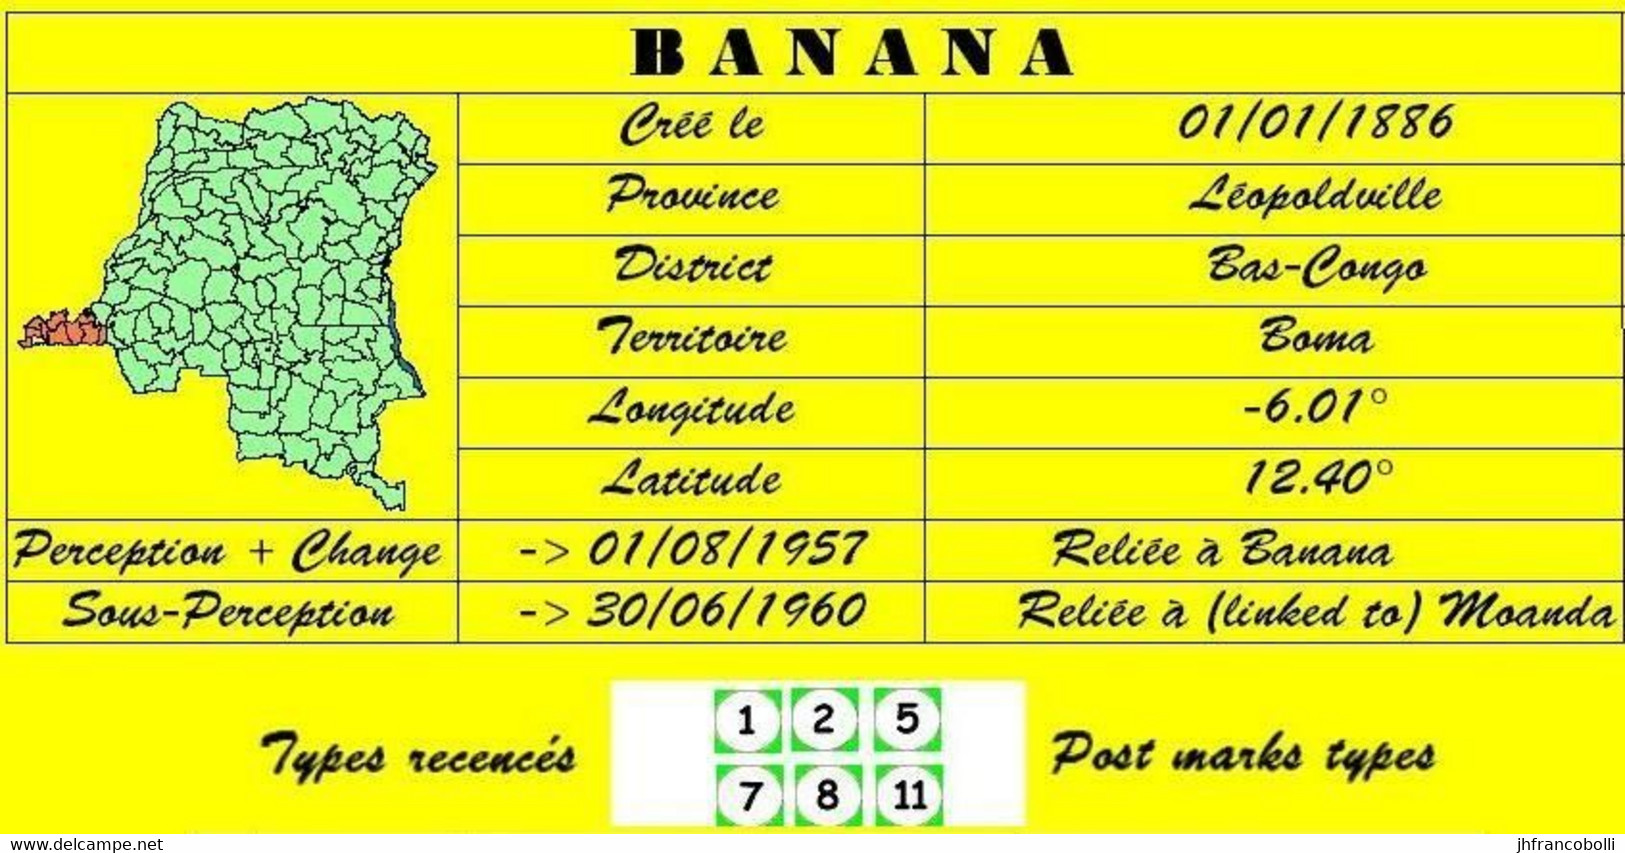 1896 (°) BANANA CONGO FREE STATE / ETAT DU CONGO IND. CANCEL STUDY [8] EIC 020 NICE ROUND PALM TREE CANCEL - Errors & Oddities